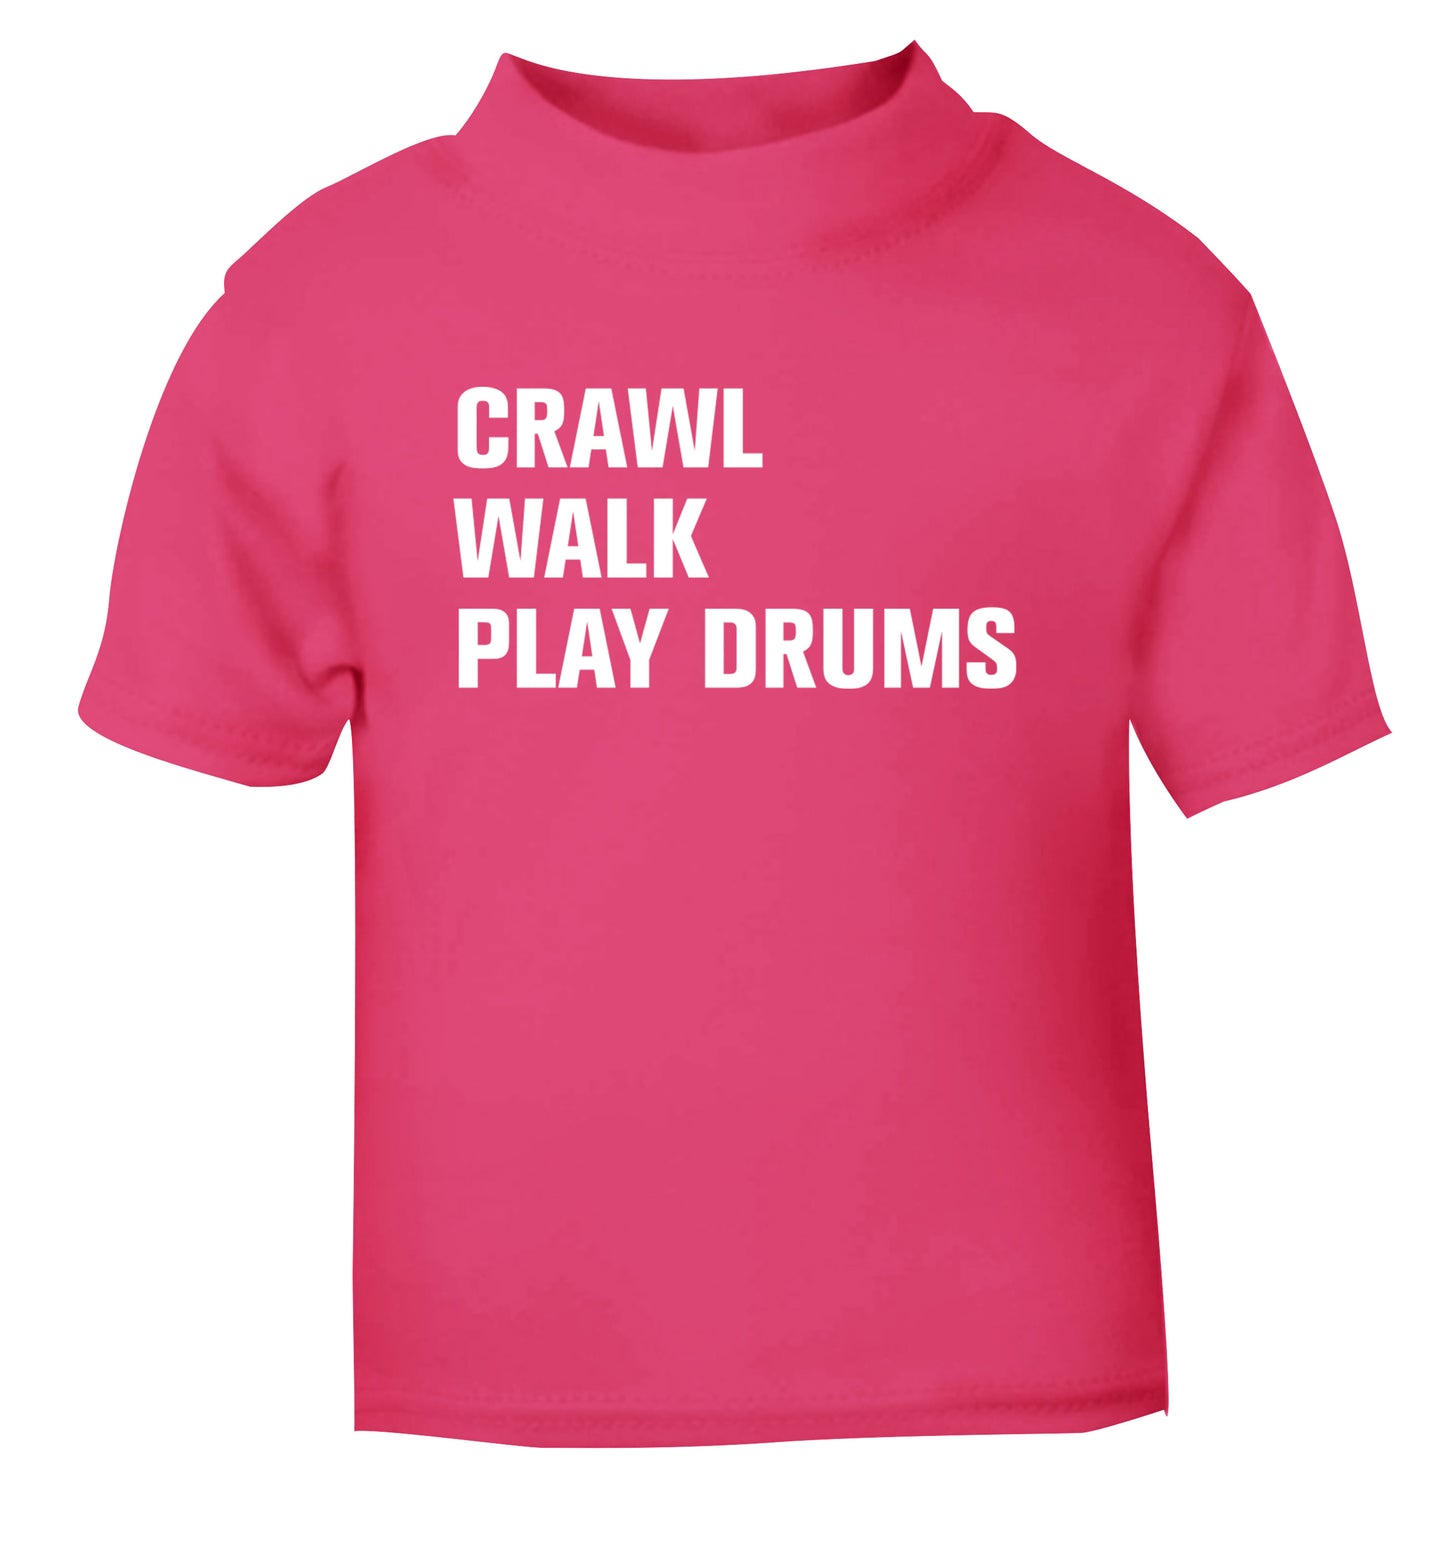 Crawl walk play drums pink Baby Toddler Tshirt 2 Years